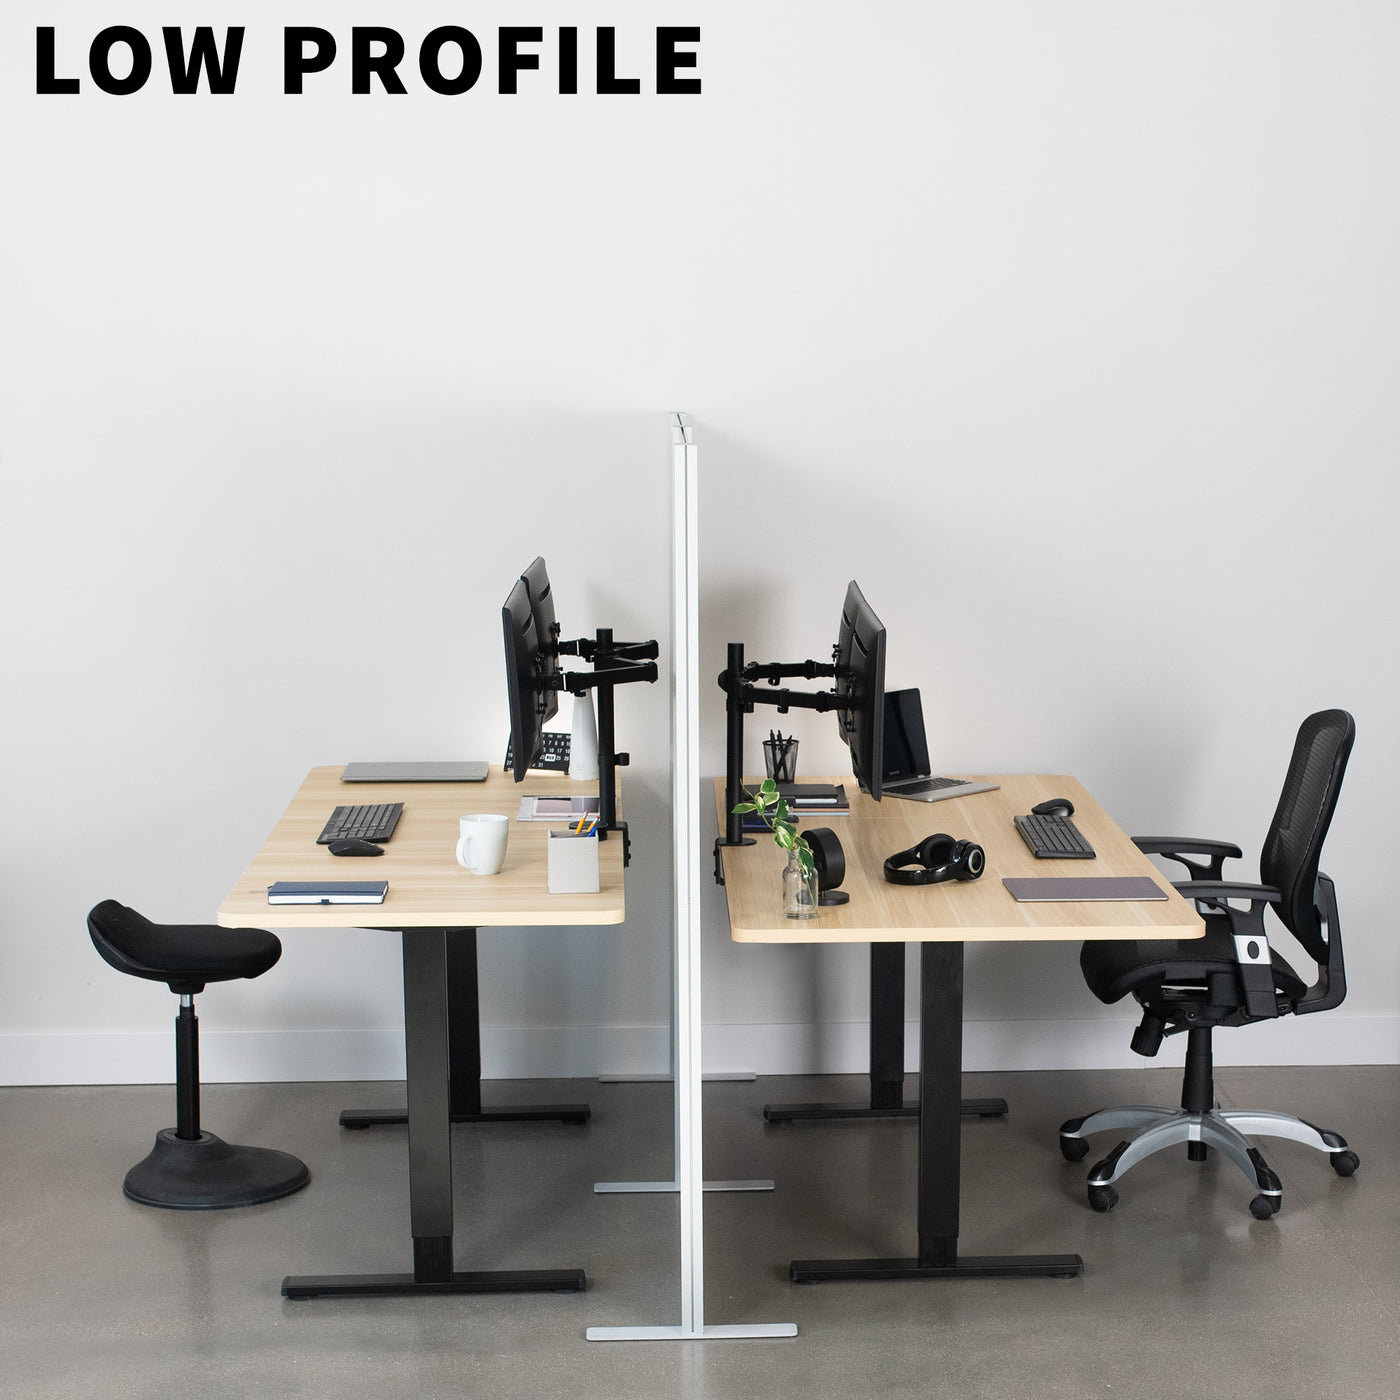 Low profile desk divider between two desks facing each other.